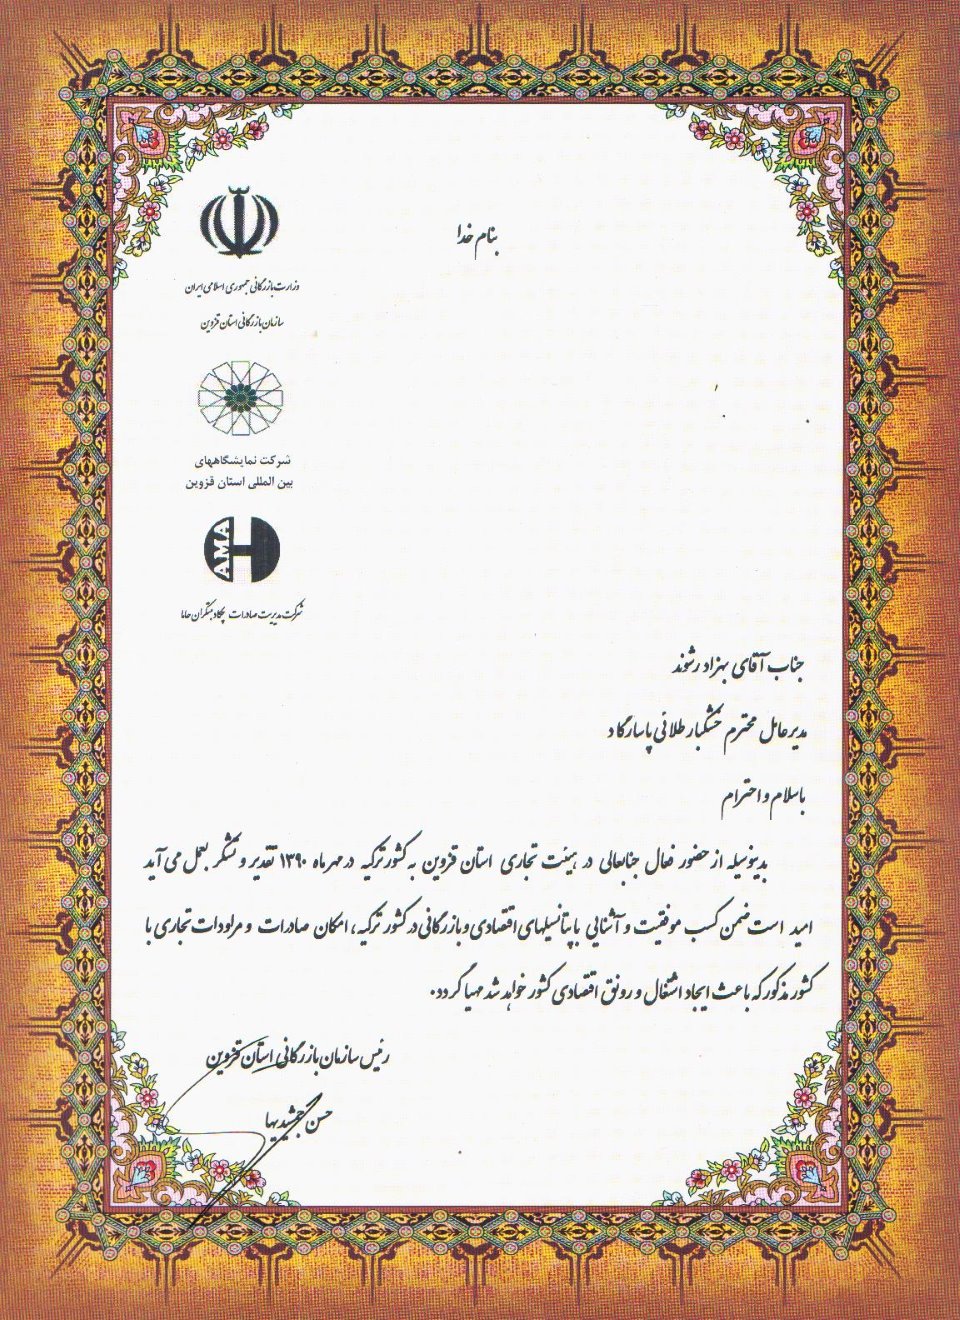 Certificate of Appreciation for attending the Iranian Business Board in Turkey